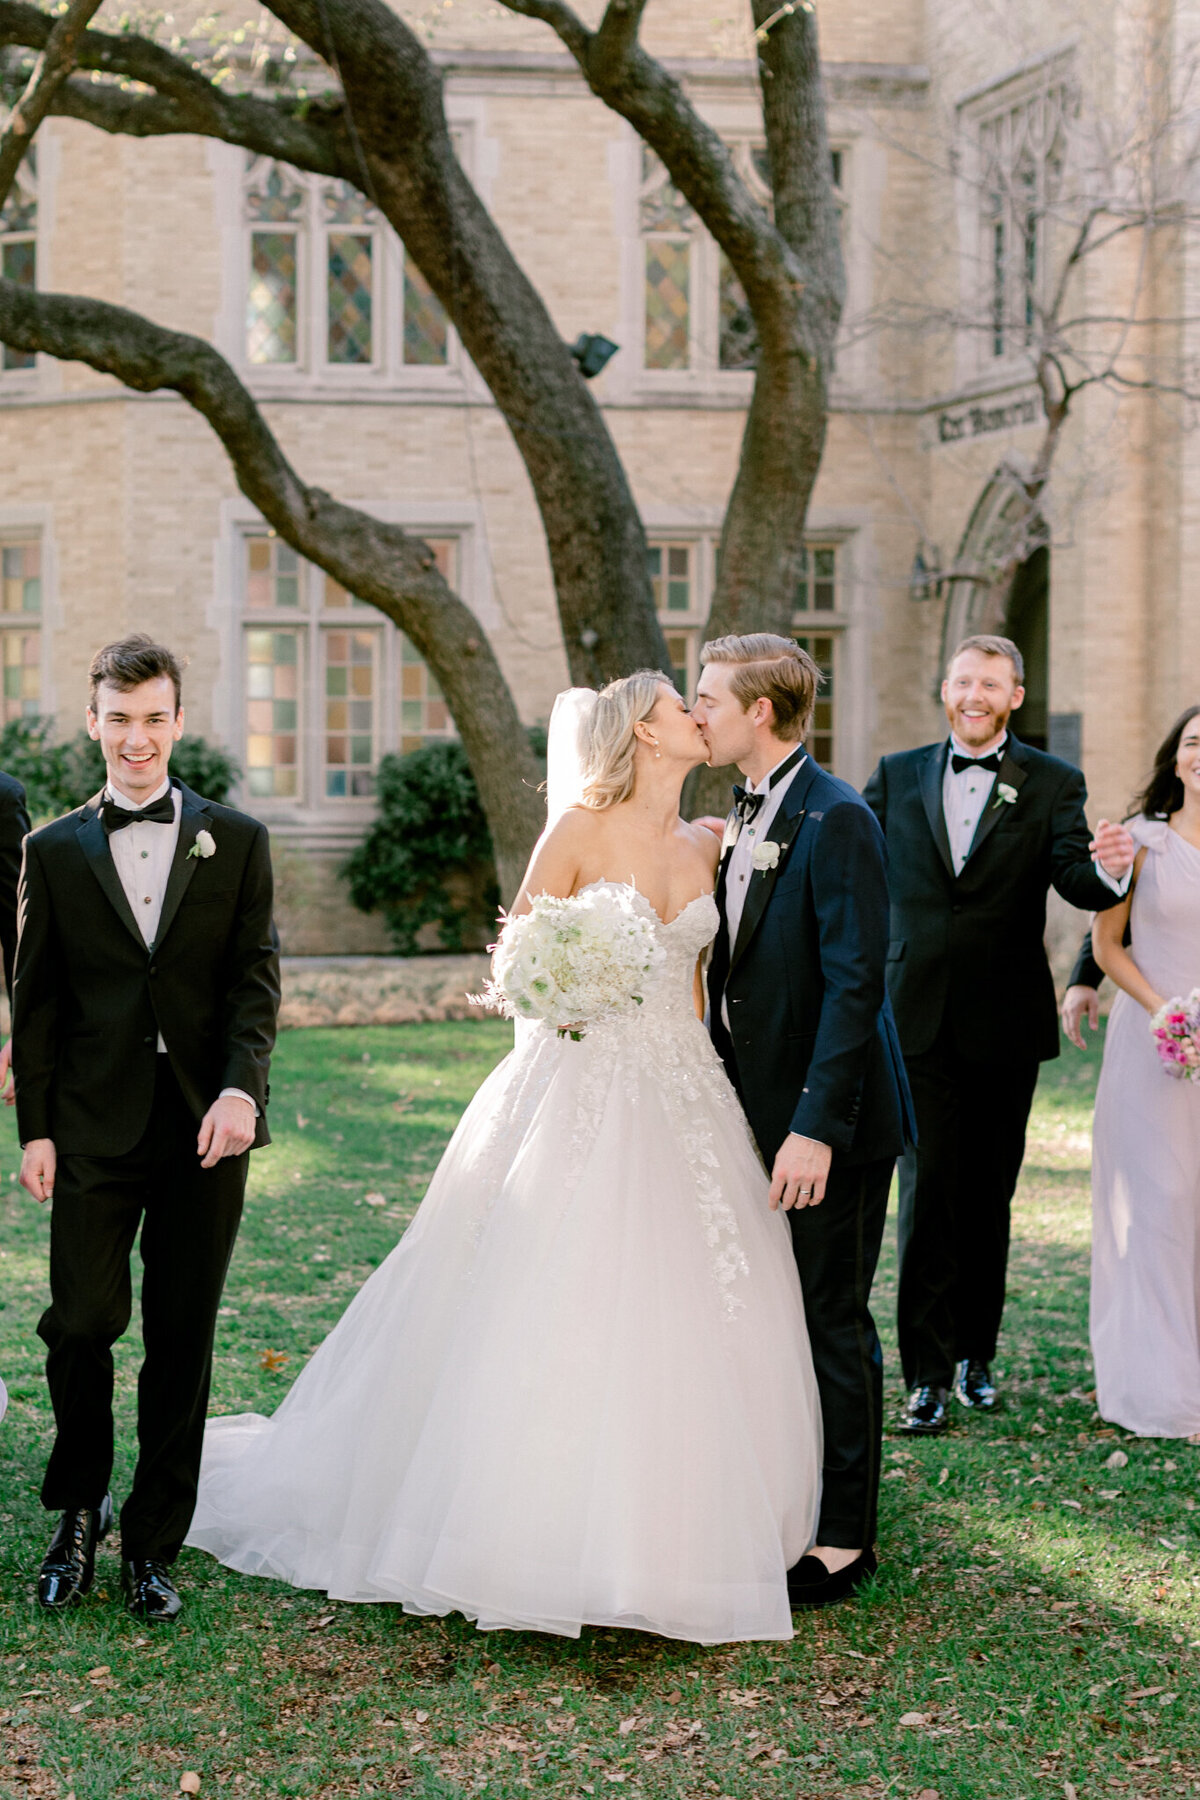 Shelby & Thomas's Wedding at HPUMC The Room on Main | Dallas Wedding Photographer | Sami Kathryn Photography-147